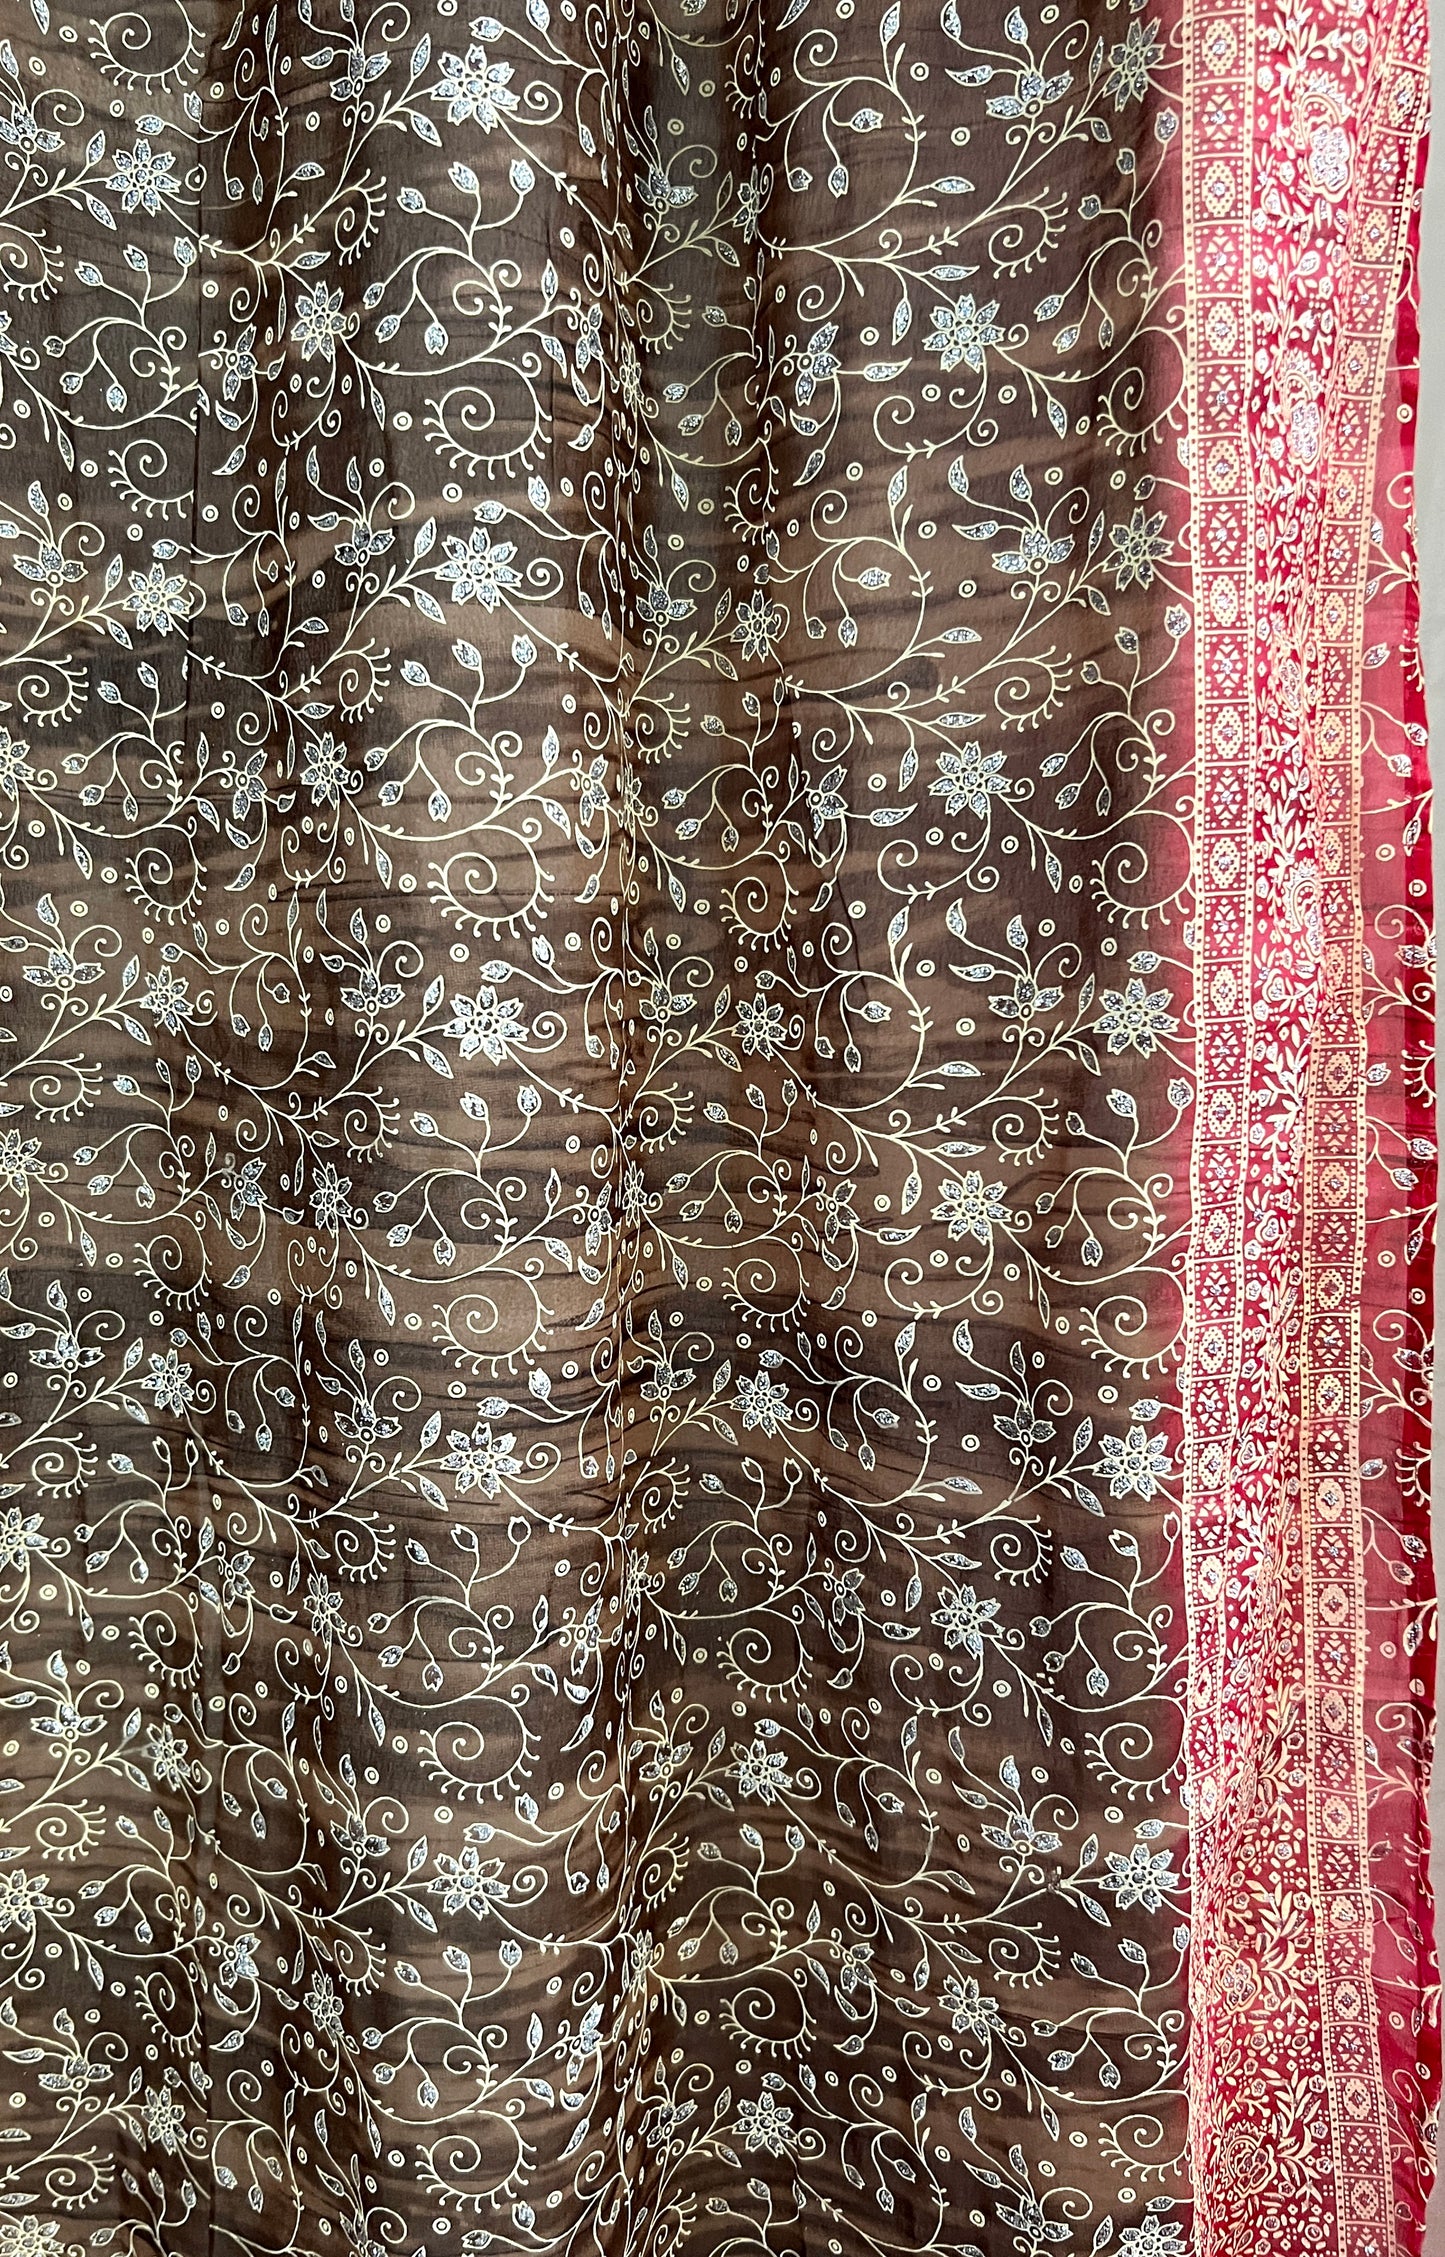 Mocha & Ruby Sari Curtain Panels